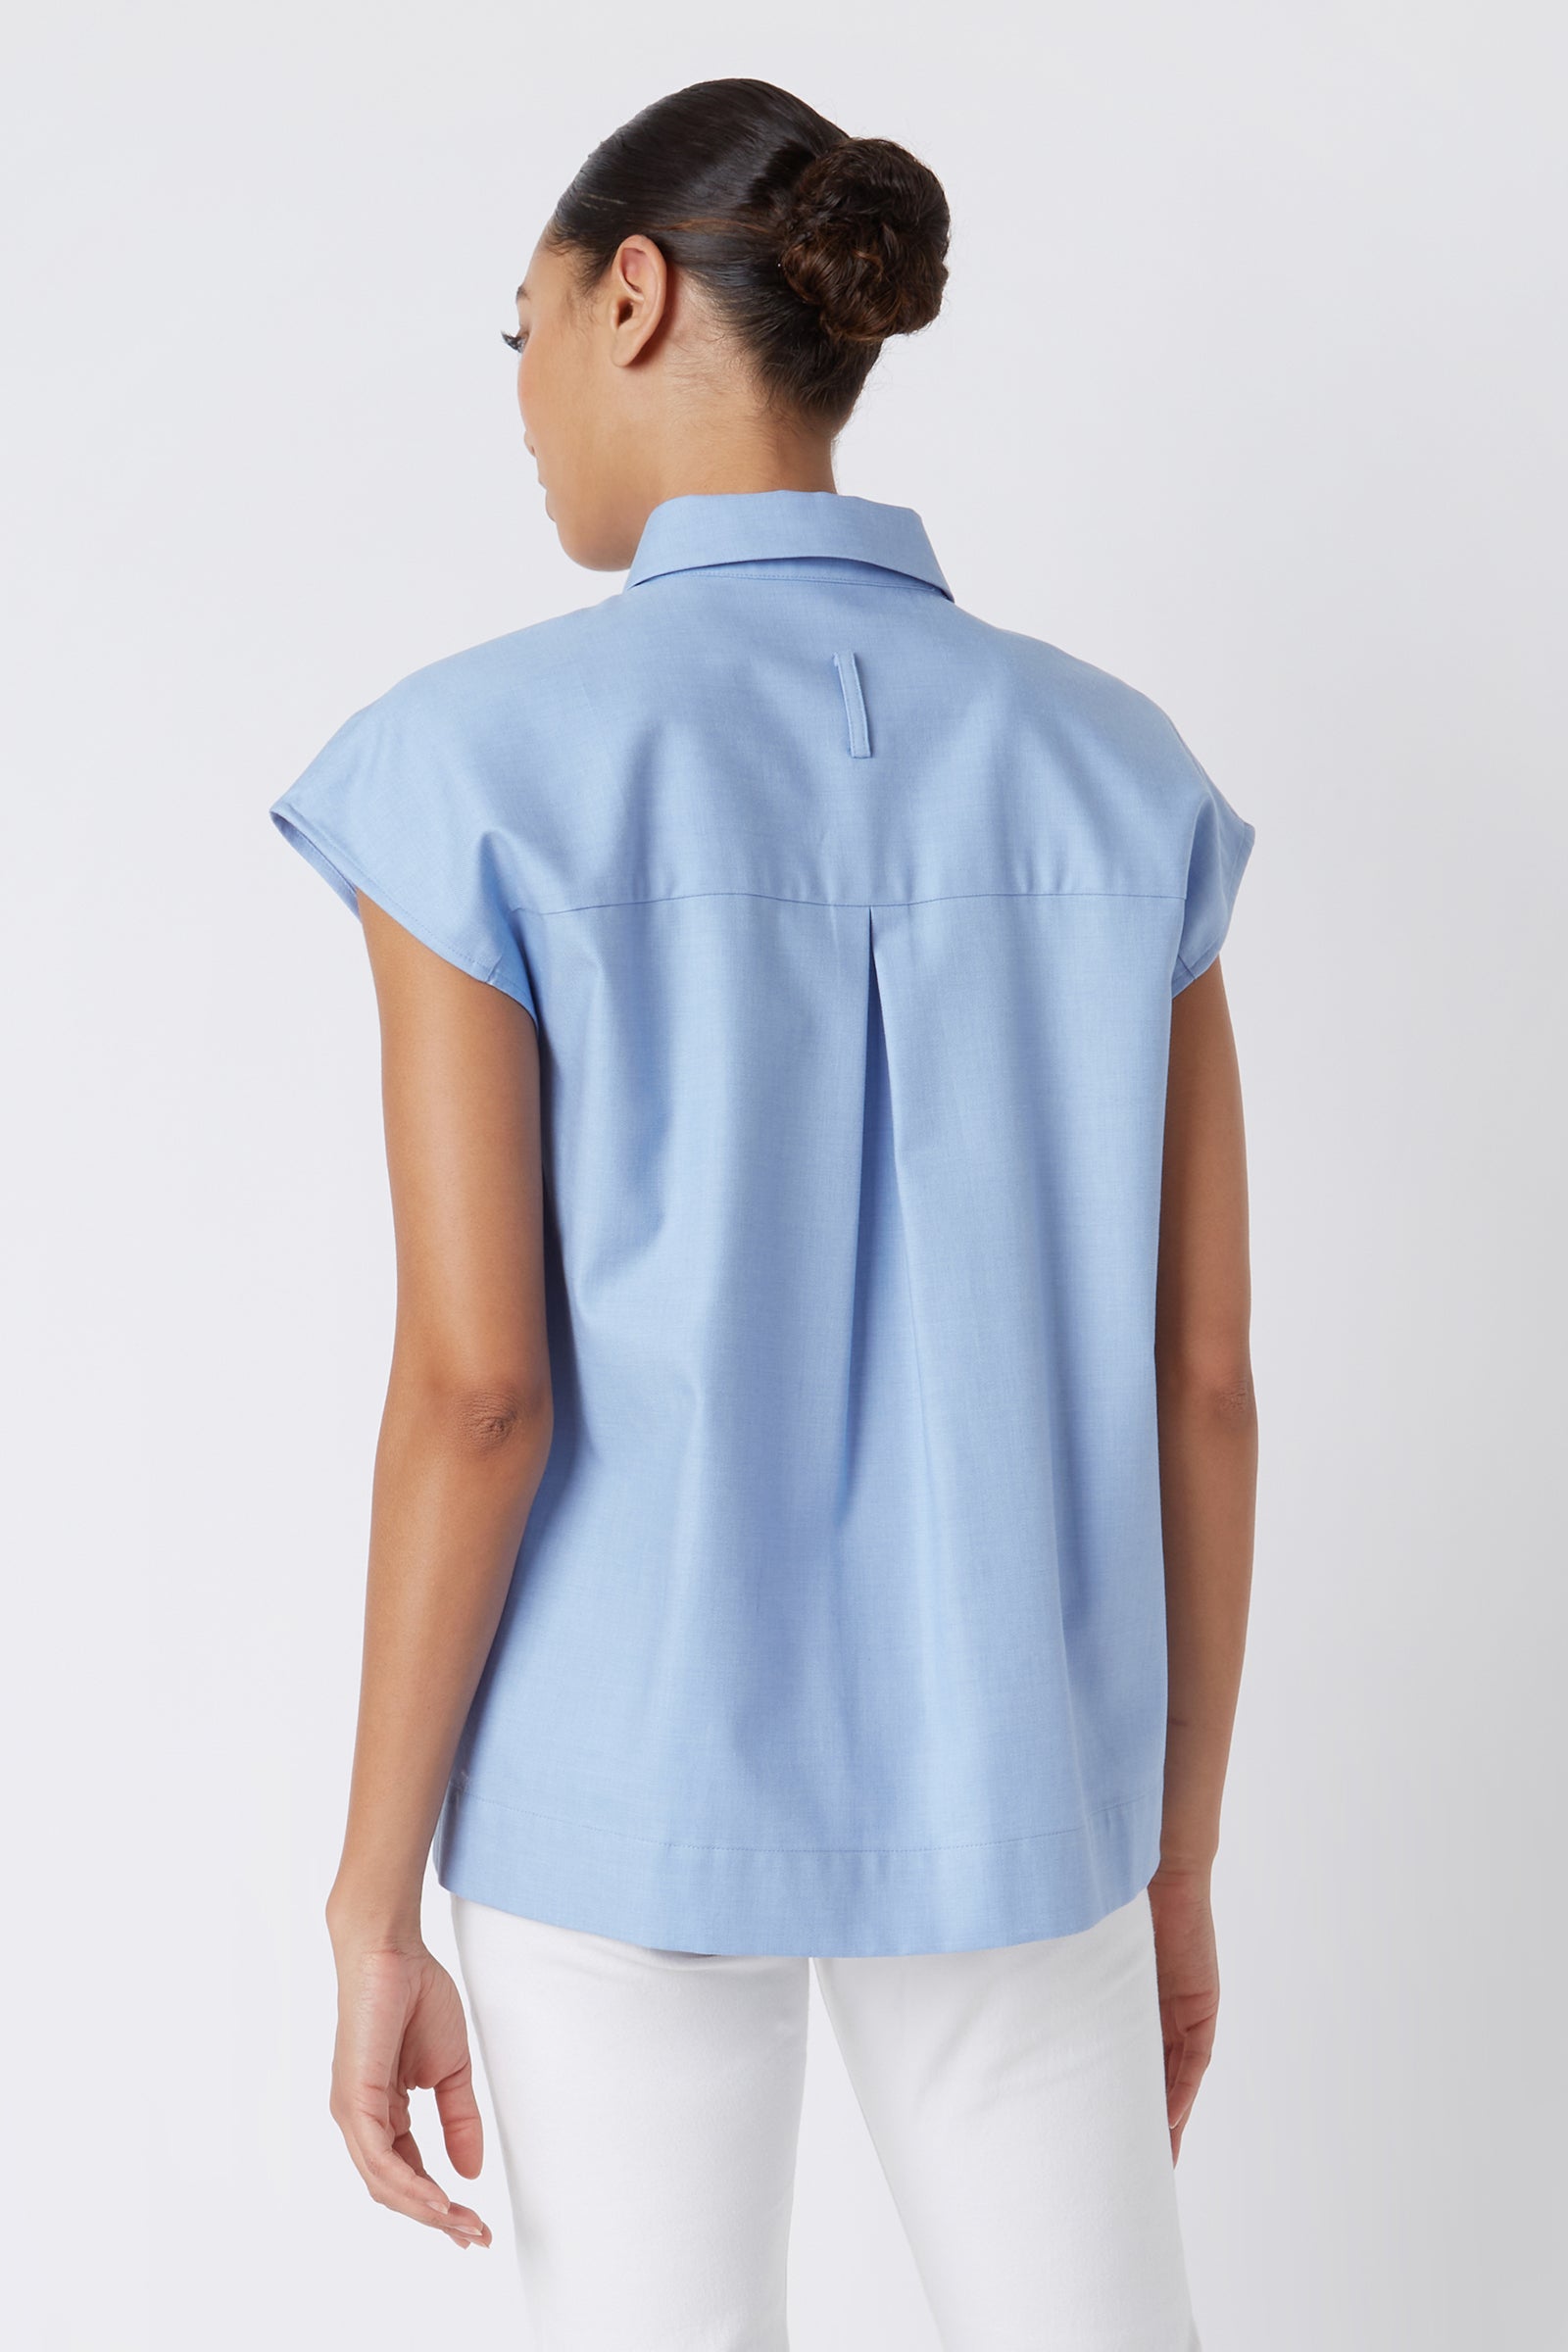 Kal Rieman Jane Cap Sleeve Shirt in Blue on Model Cropped Back View